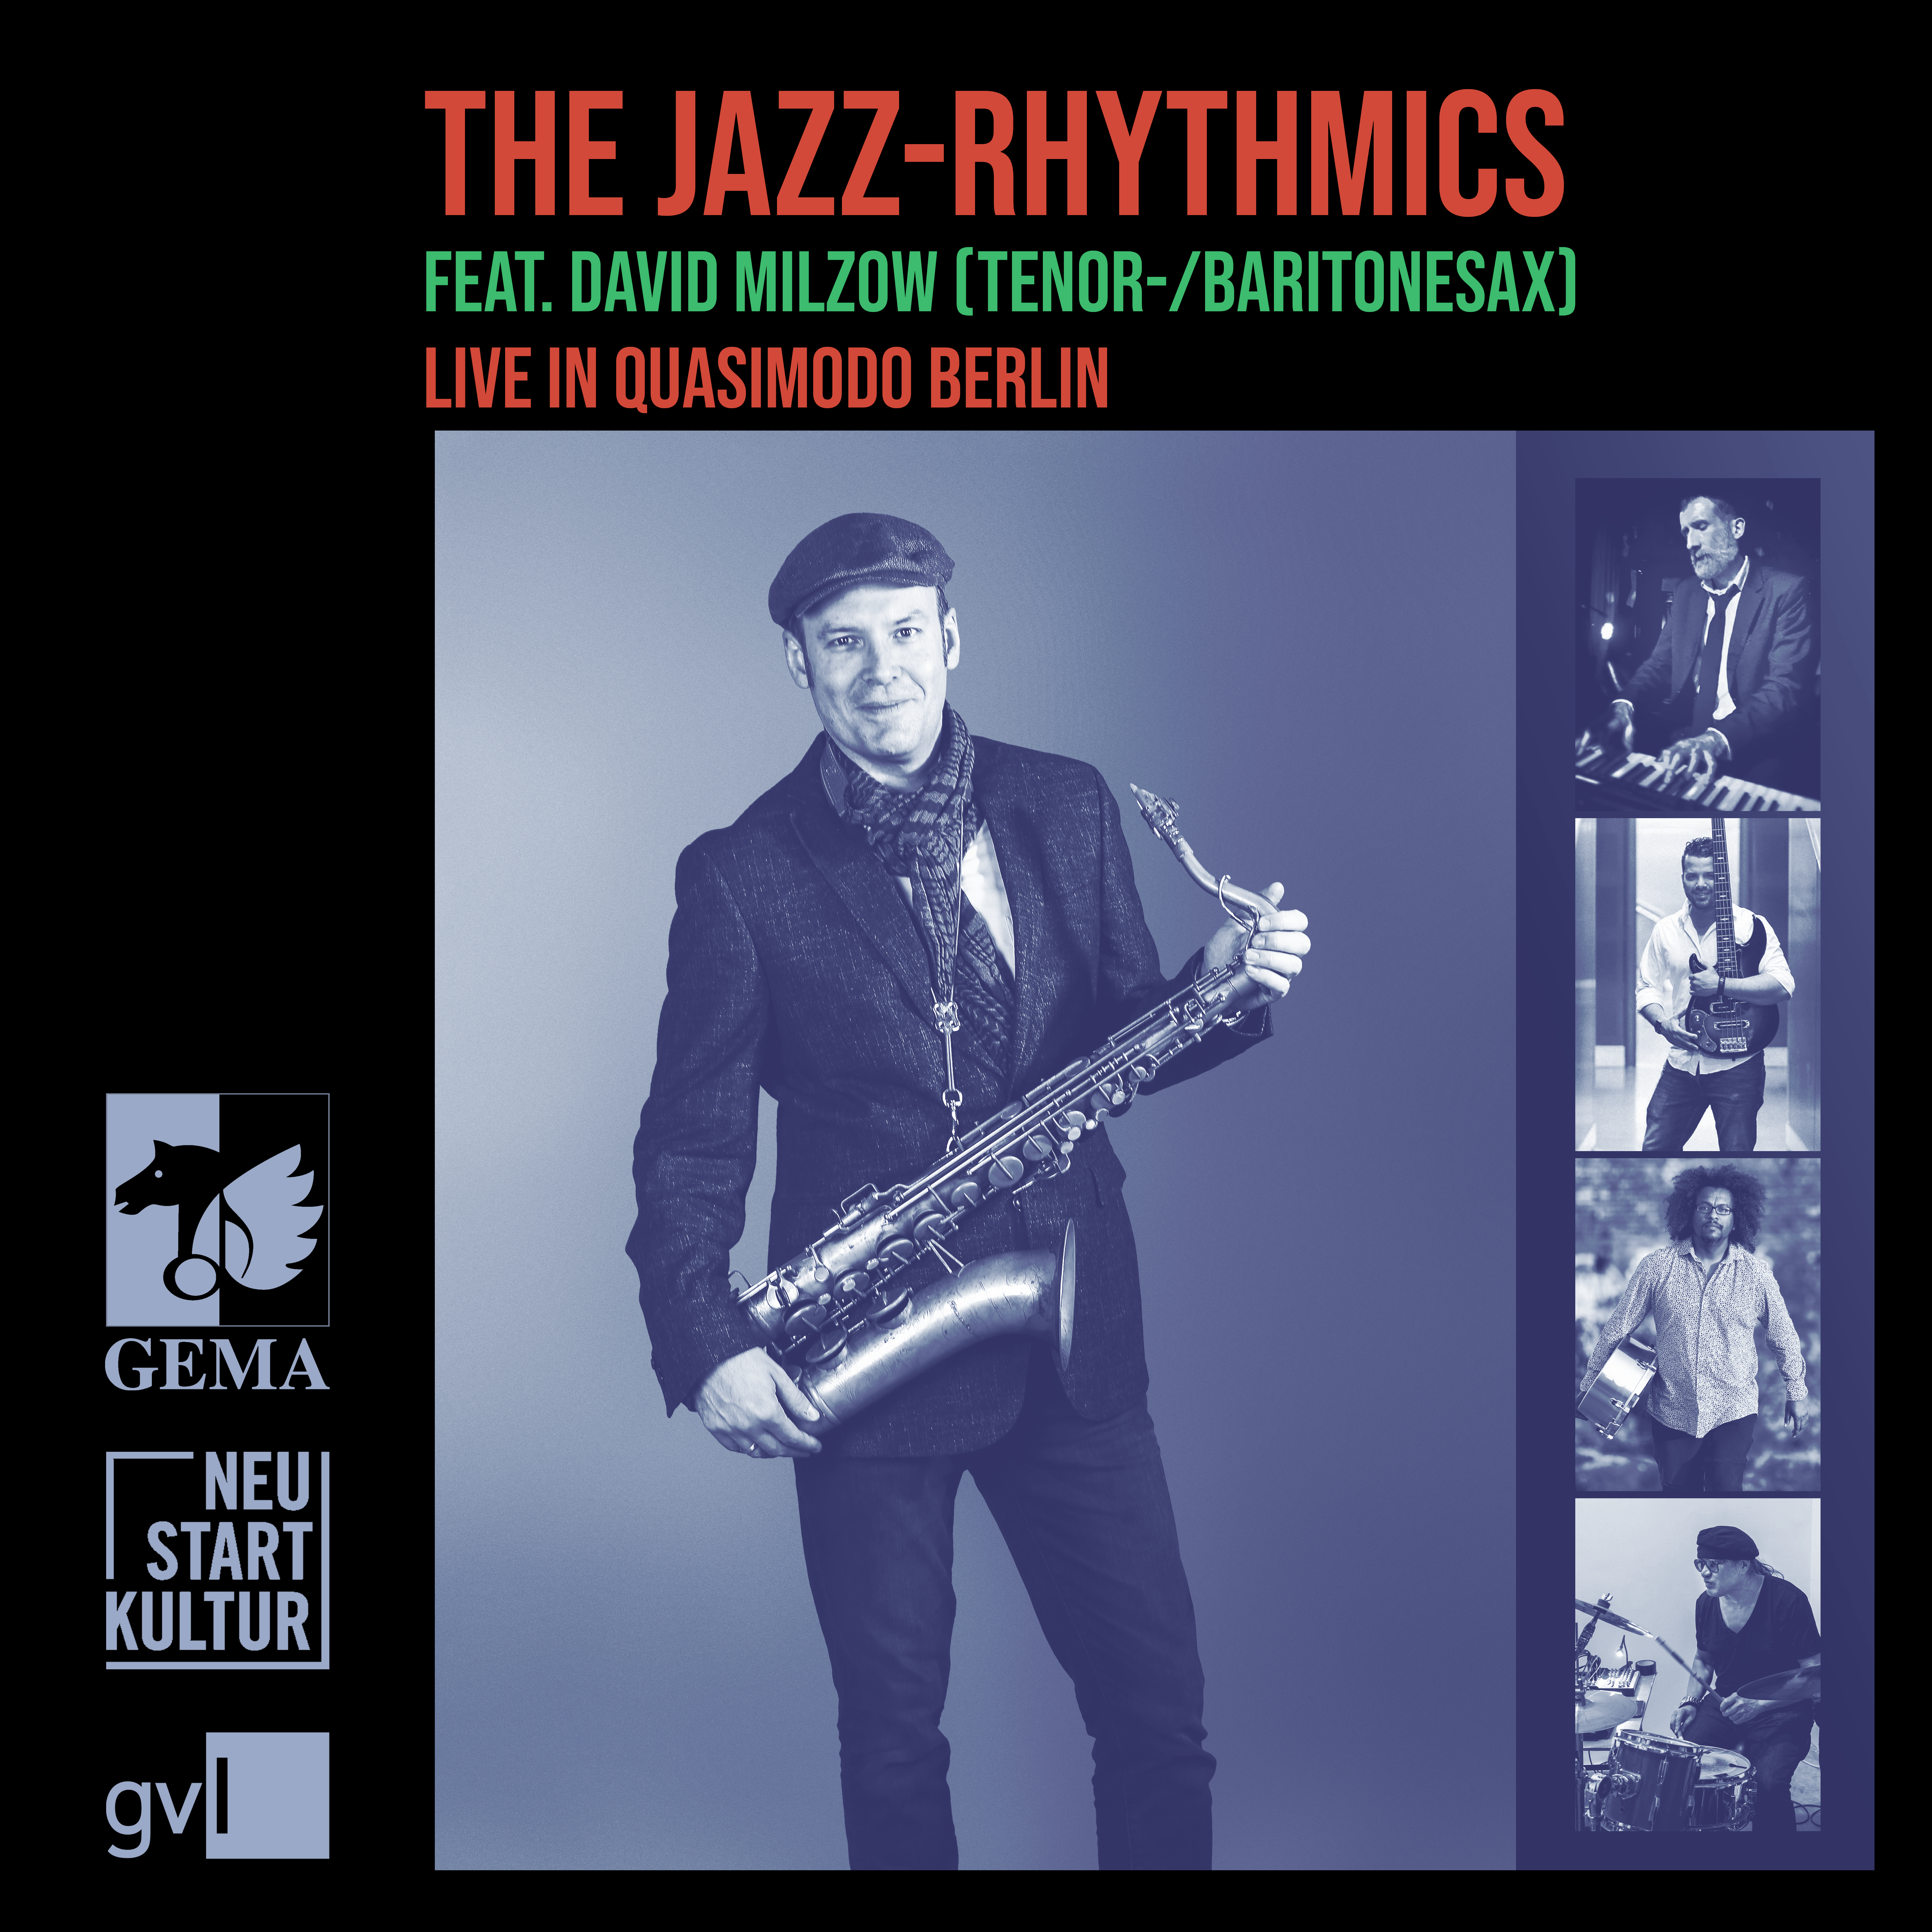 The Jazz-Rhyhtmics feat. David Milzow, Live in Quasimodo Berlin